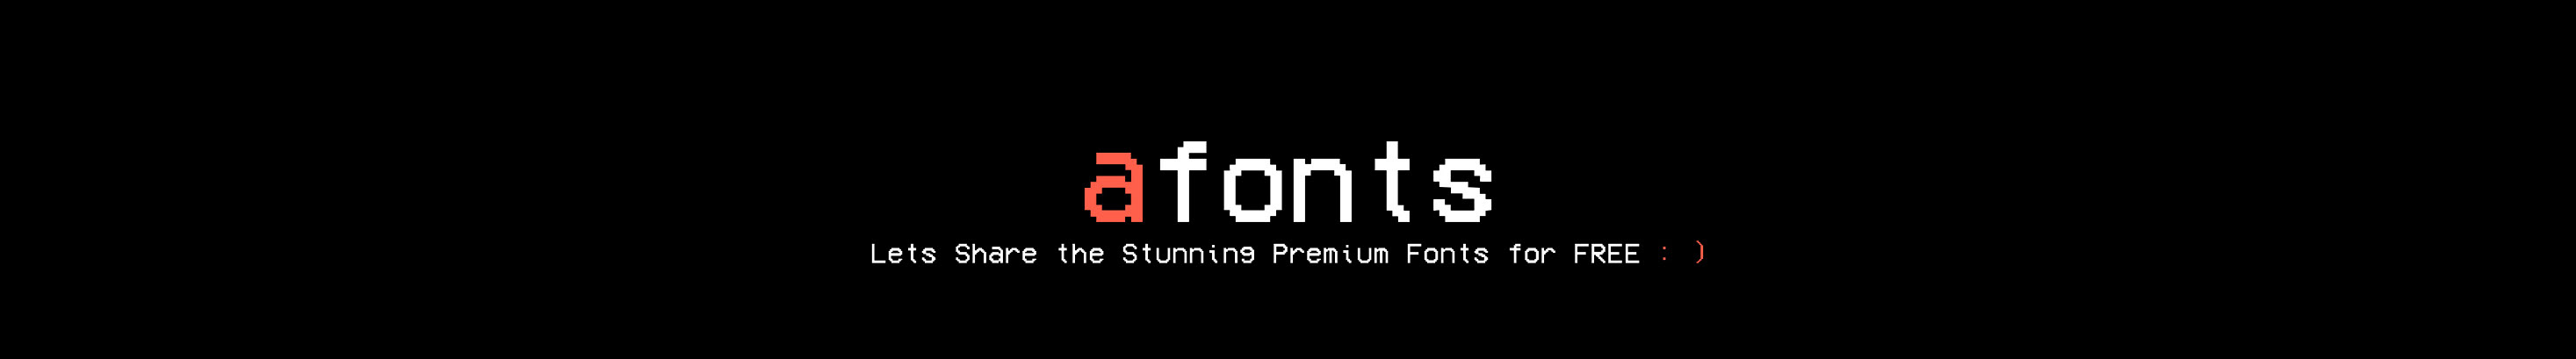 afonts .org's profile banner